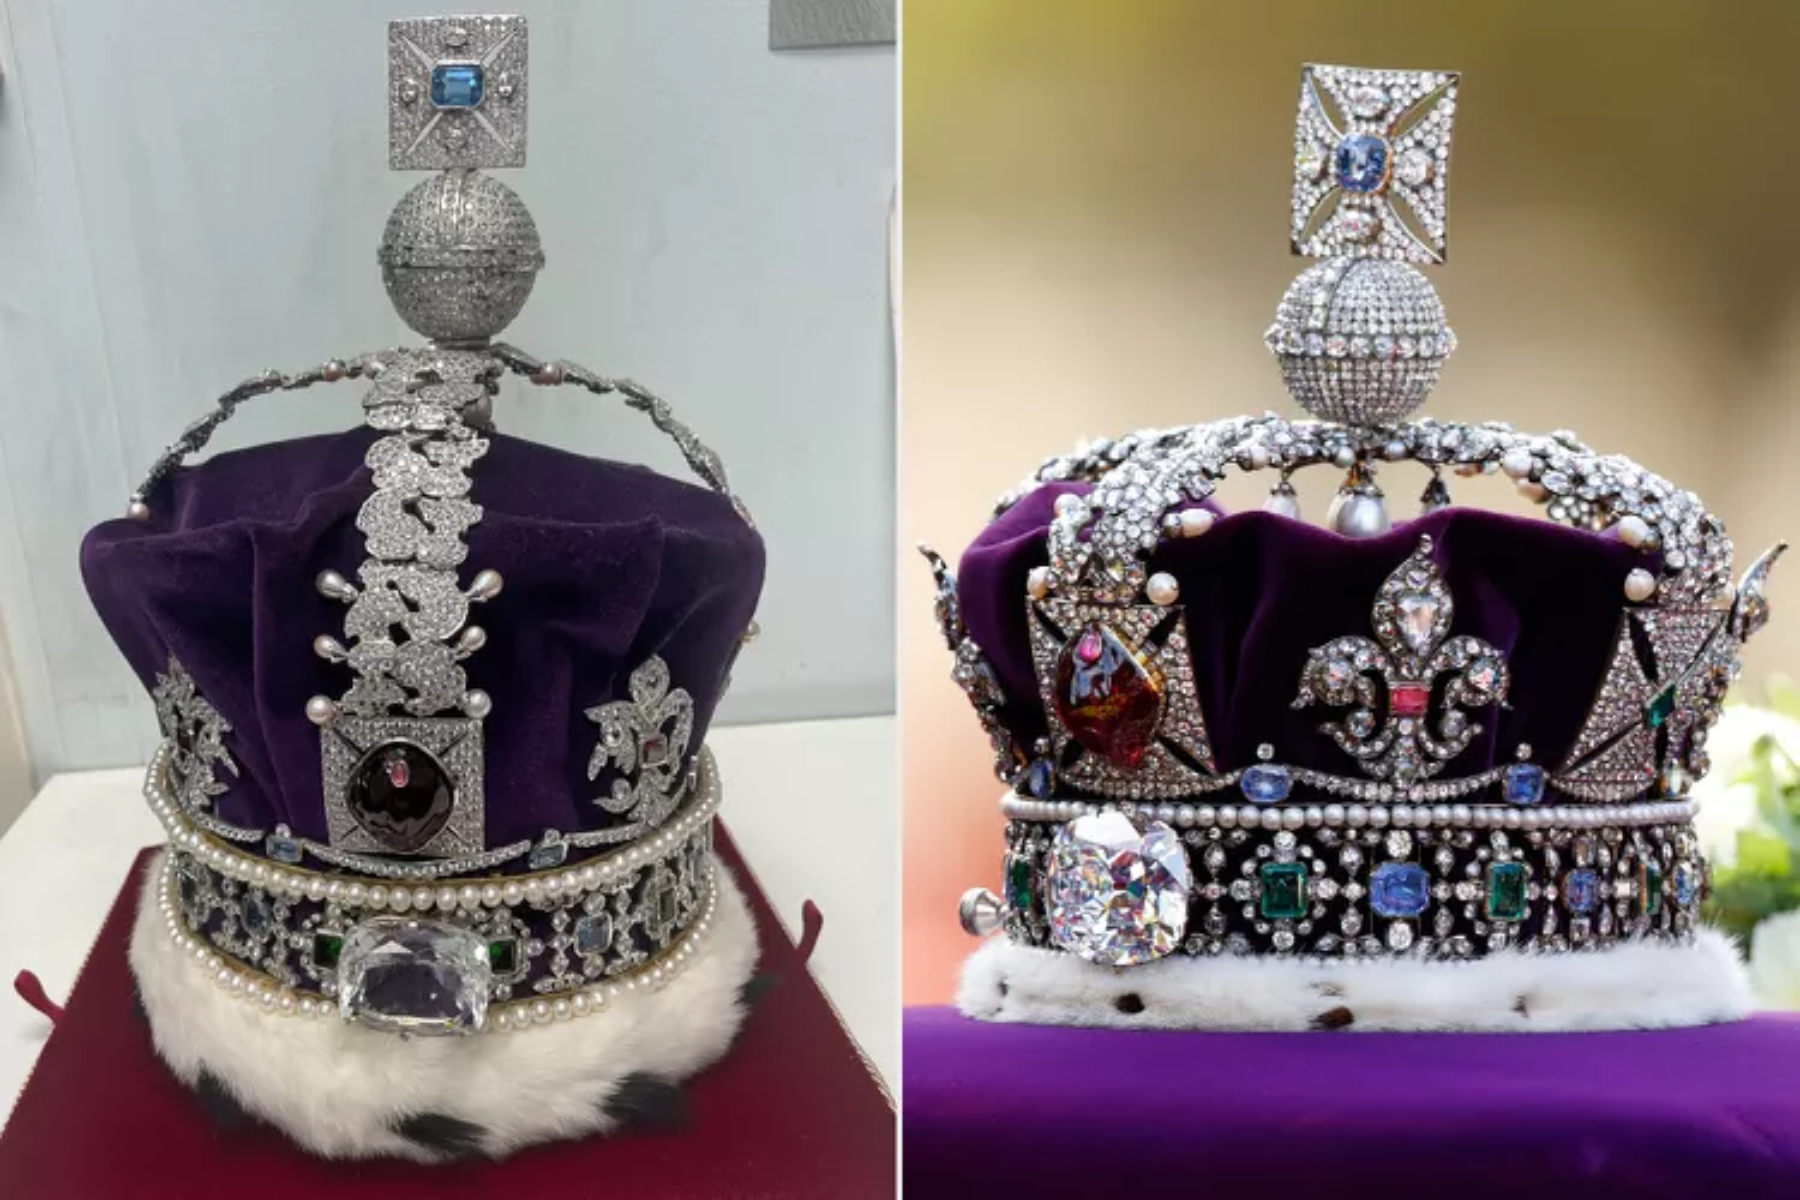 Queen Elizabeth's Famous Crown Replica - Can You Spot The Authentic Crown?